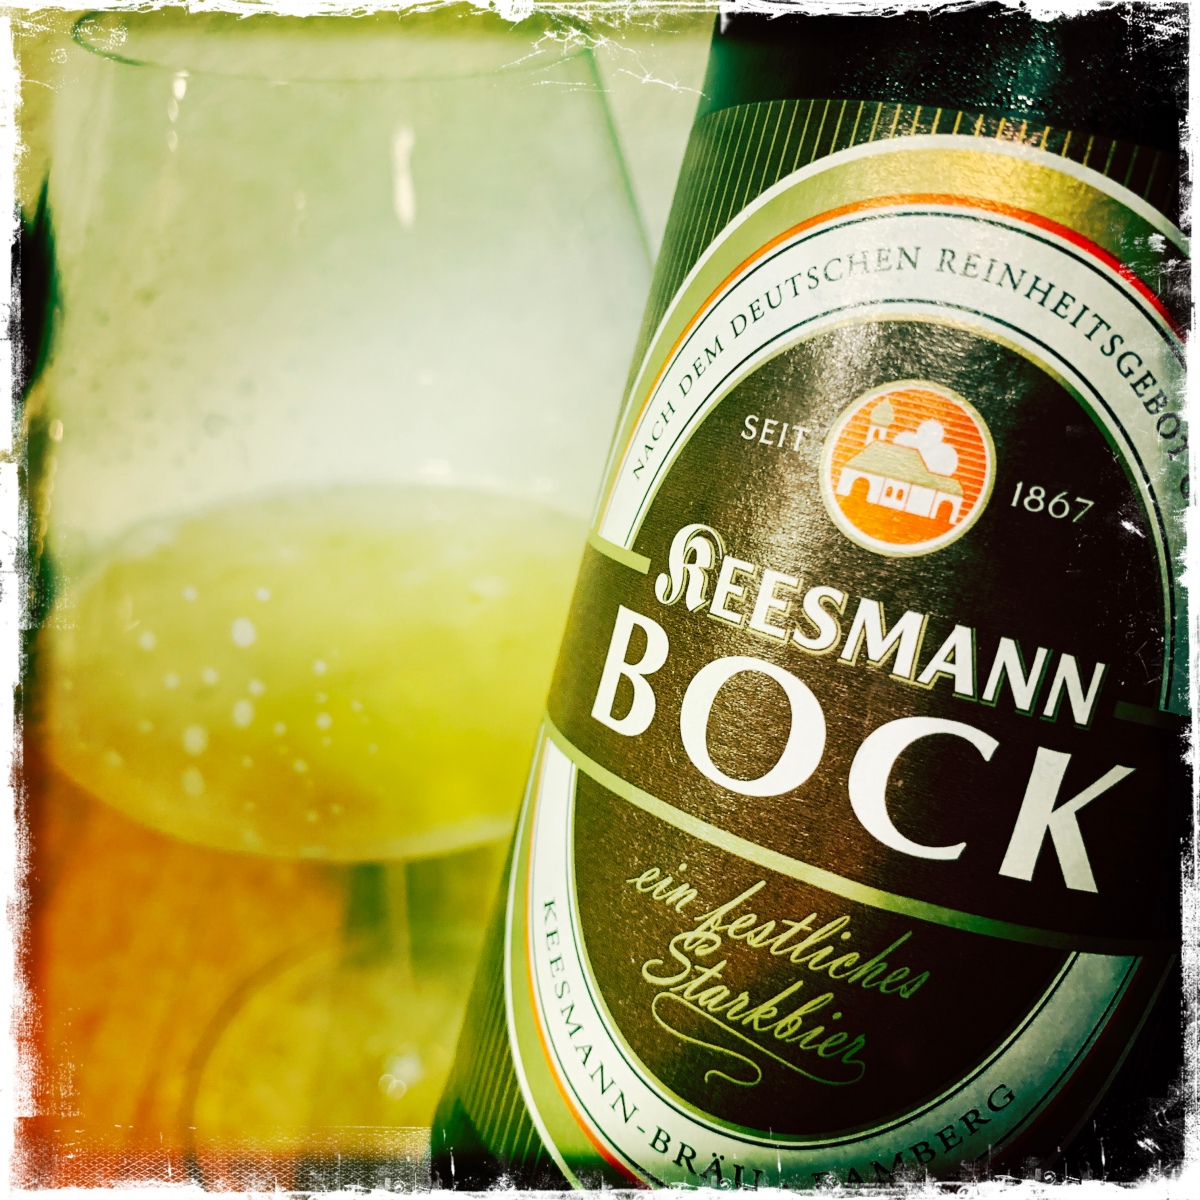 Keesmann Bräu/Bamberg – Bock